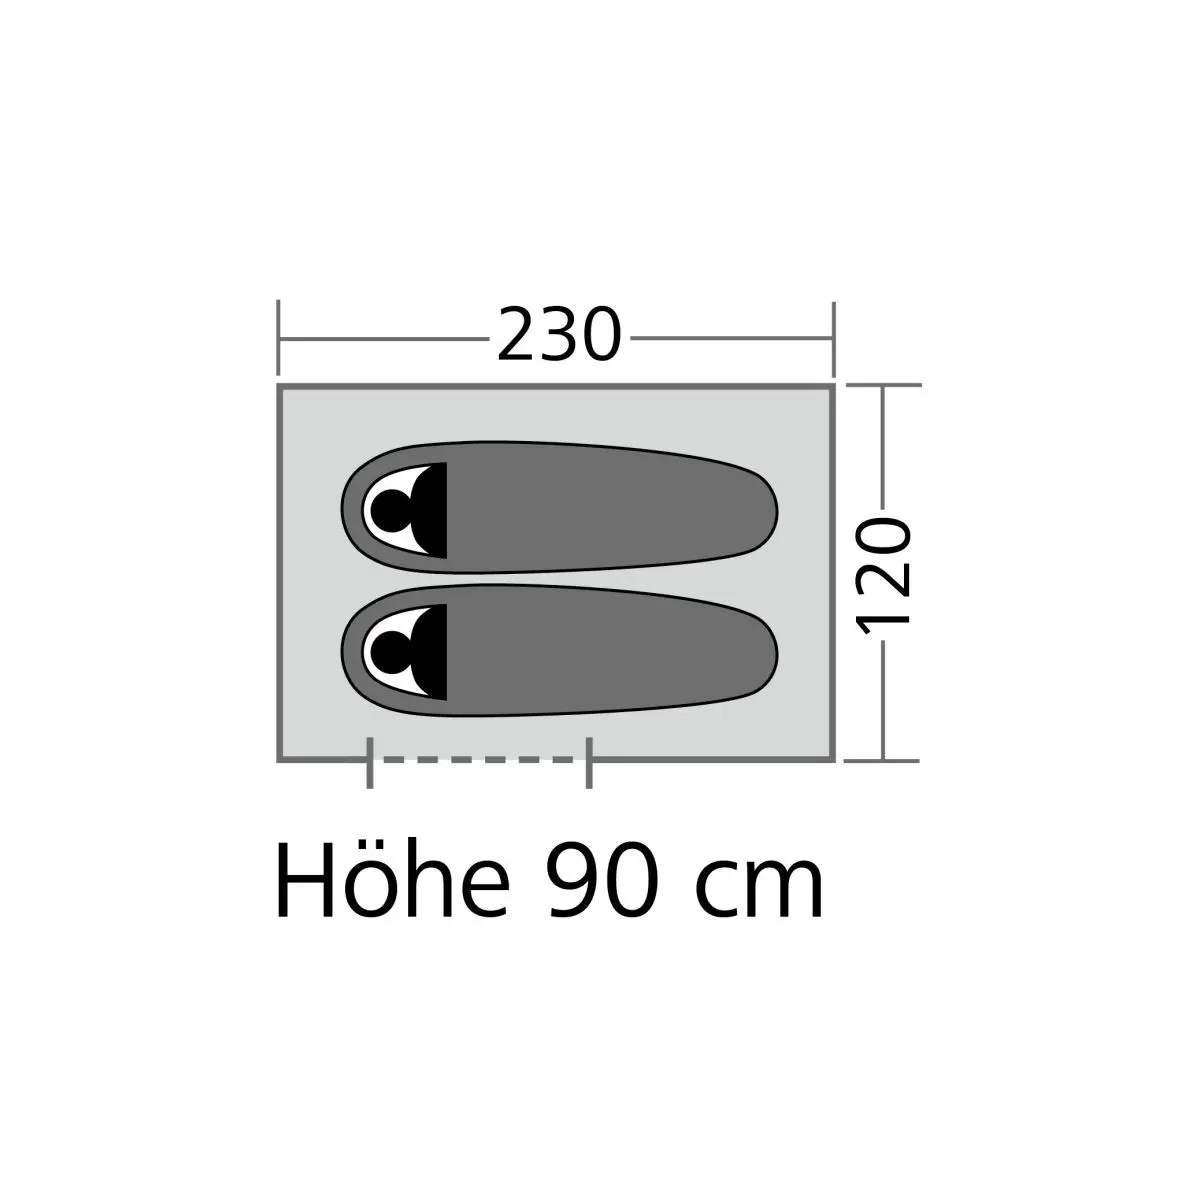 Cort de ciclism Siskin - 230 x 120 x 90 cm